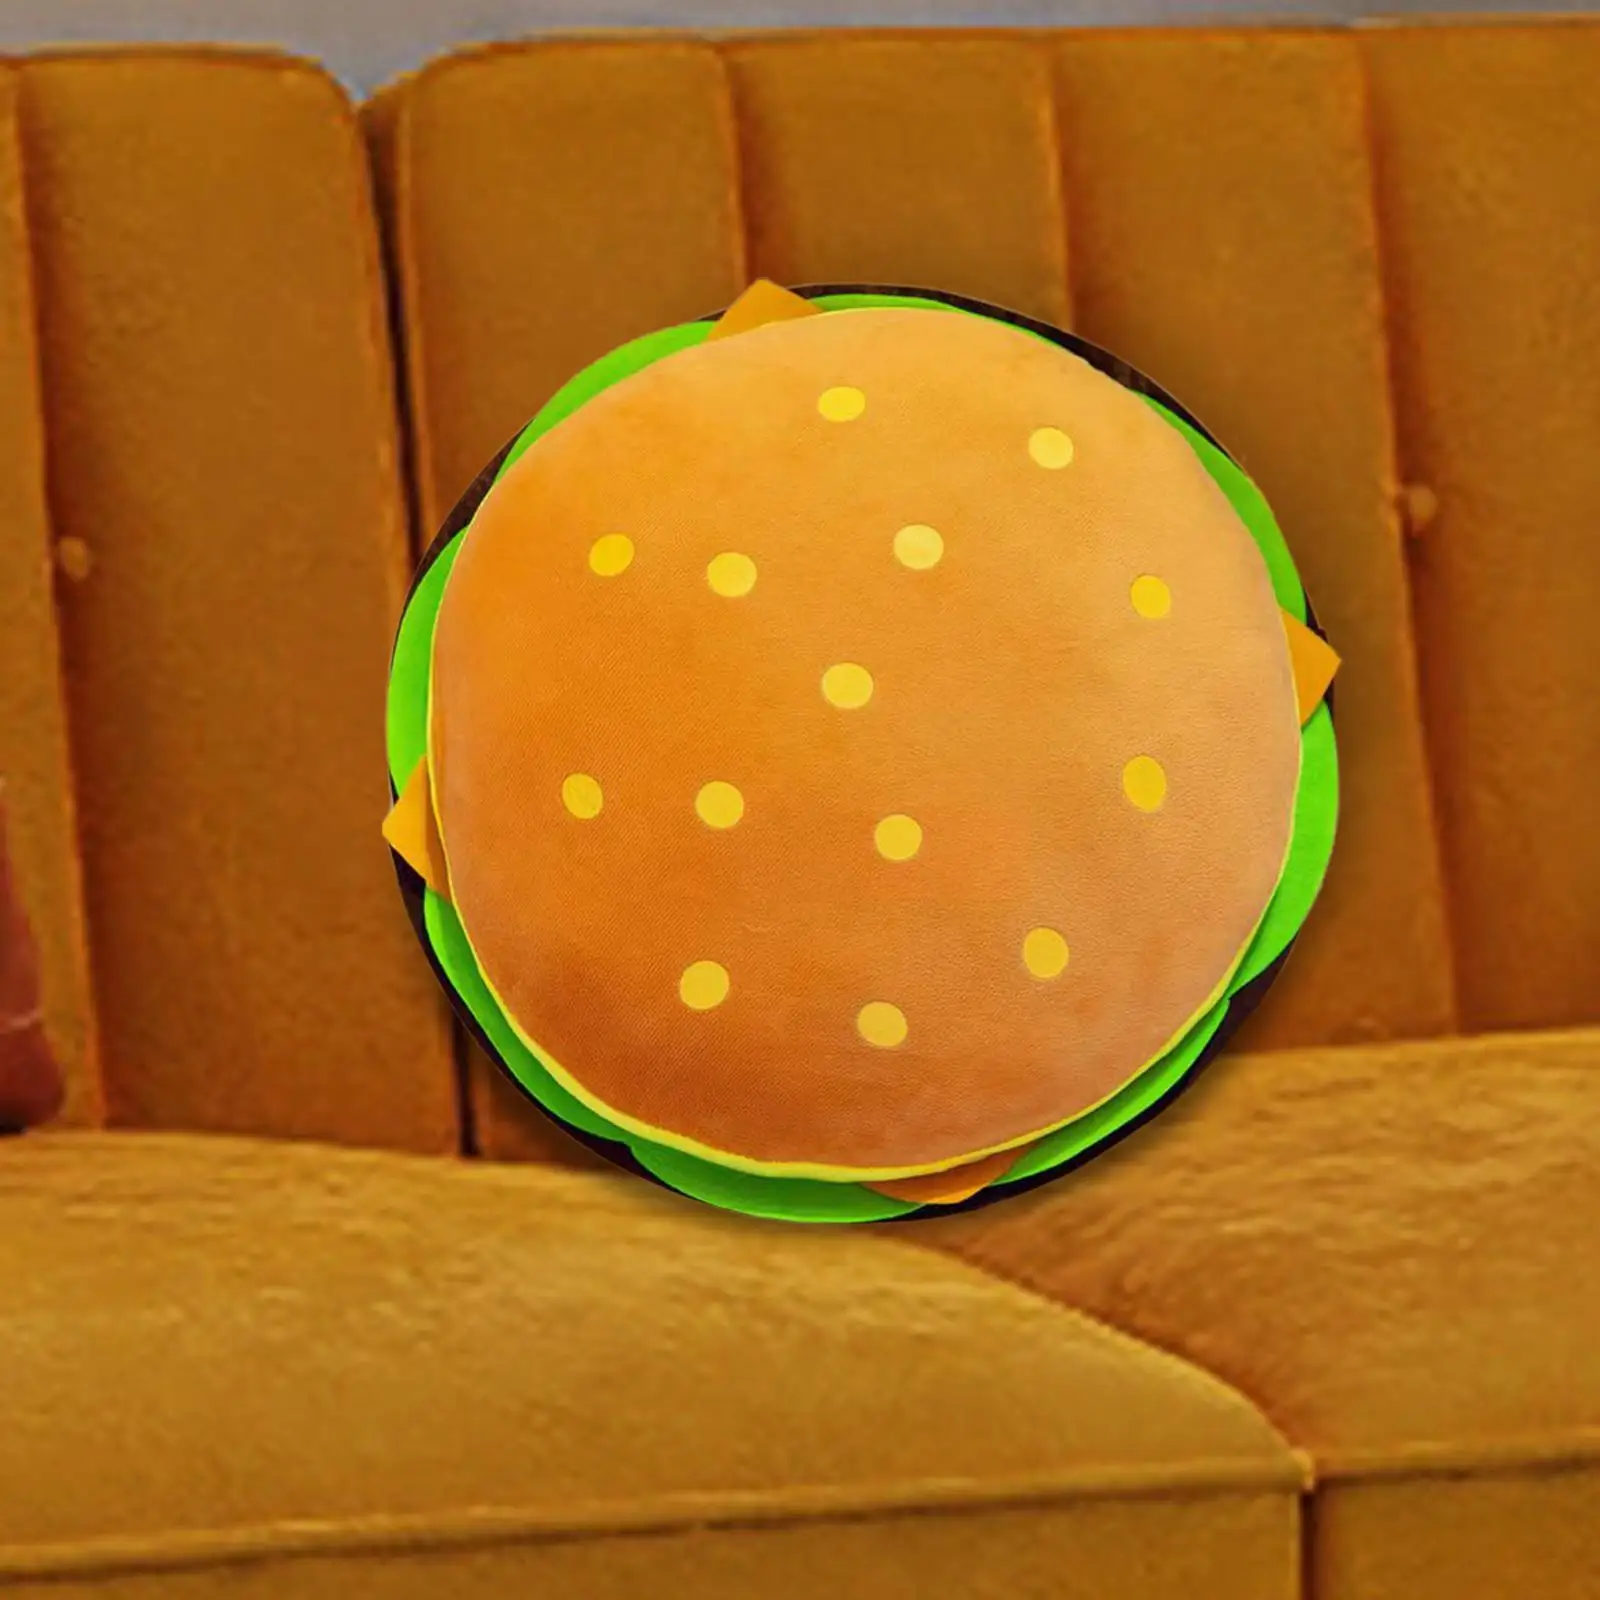 Hamburger Stuffed Cushion Pillow Photo Prop Cute Burger Bedroom Gift Soft Cheeseburger Plush Toy for Holiday Desktop Car Child